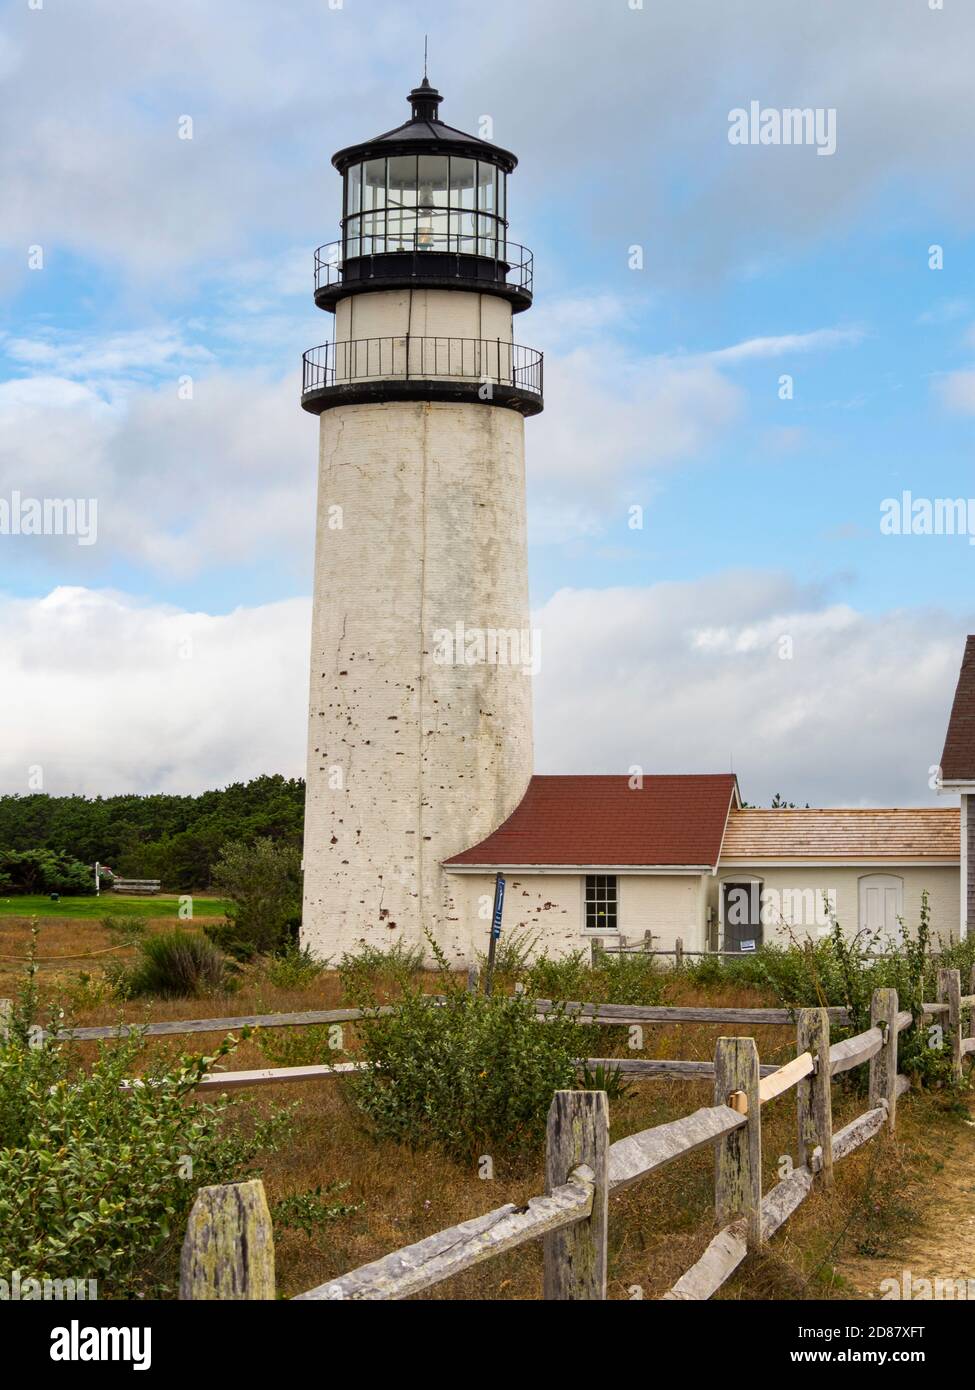 Cape Cod Lighthouse aka Highland Light Station. Das älteste Leuchthaus am Cape Cod, in North Truro, Massachusetts, USA, Labor Day Wochenende. Stockfoto